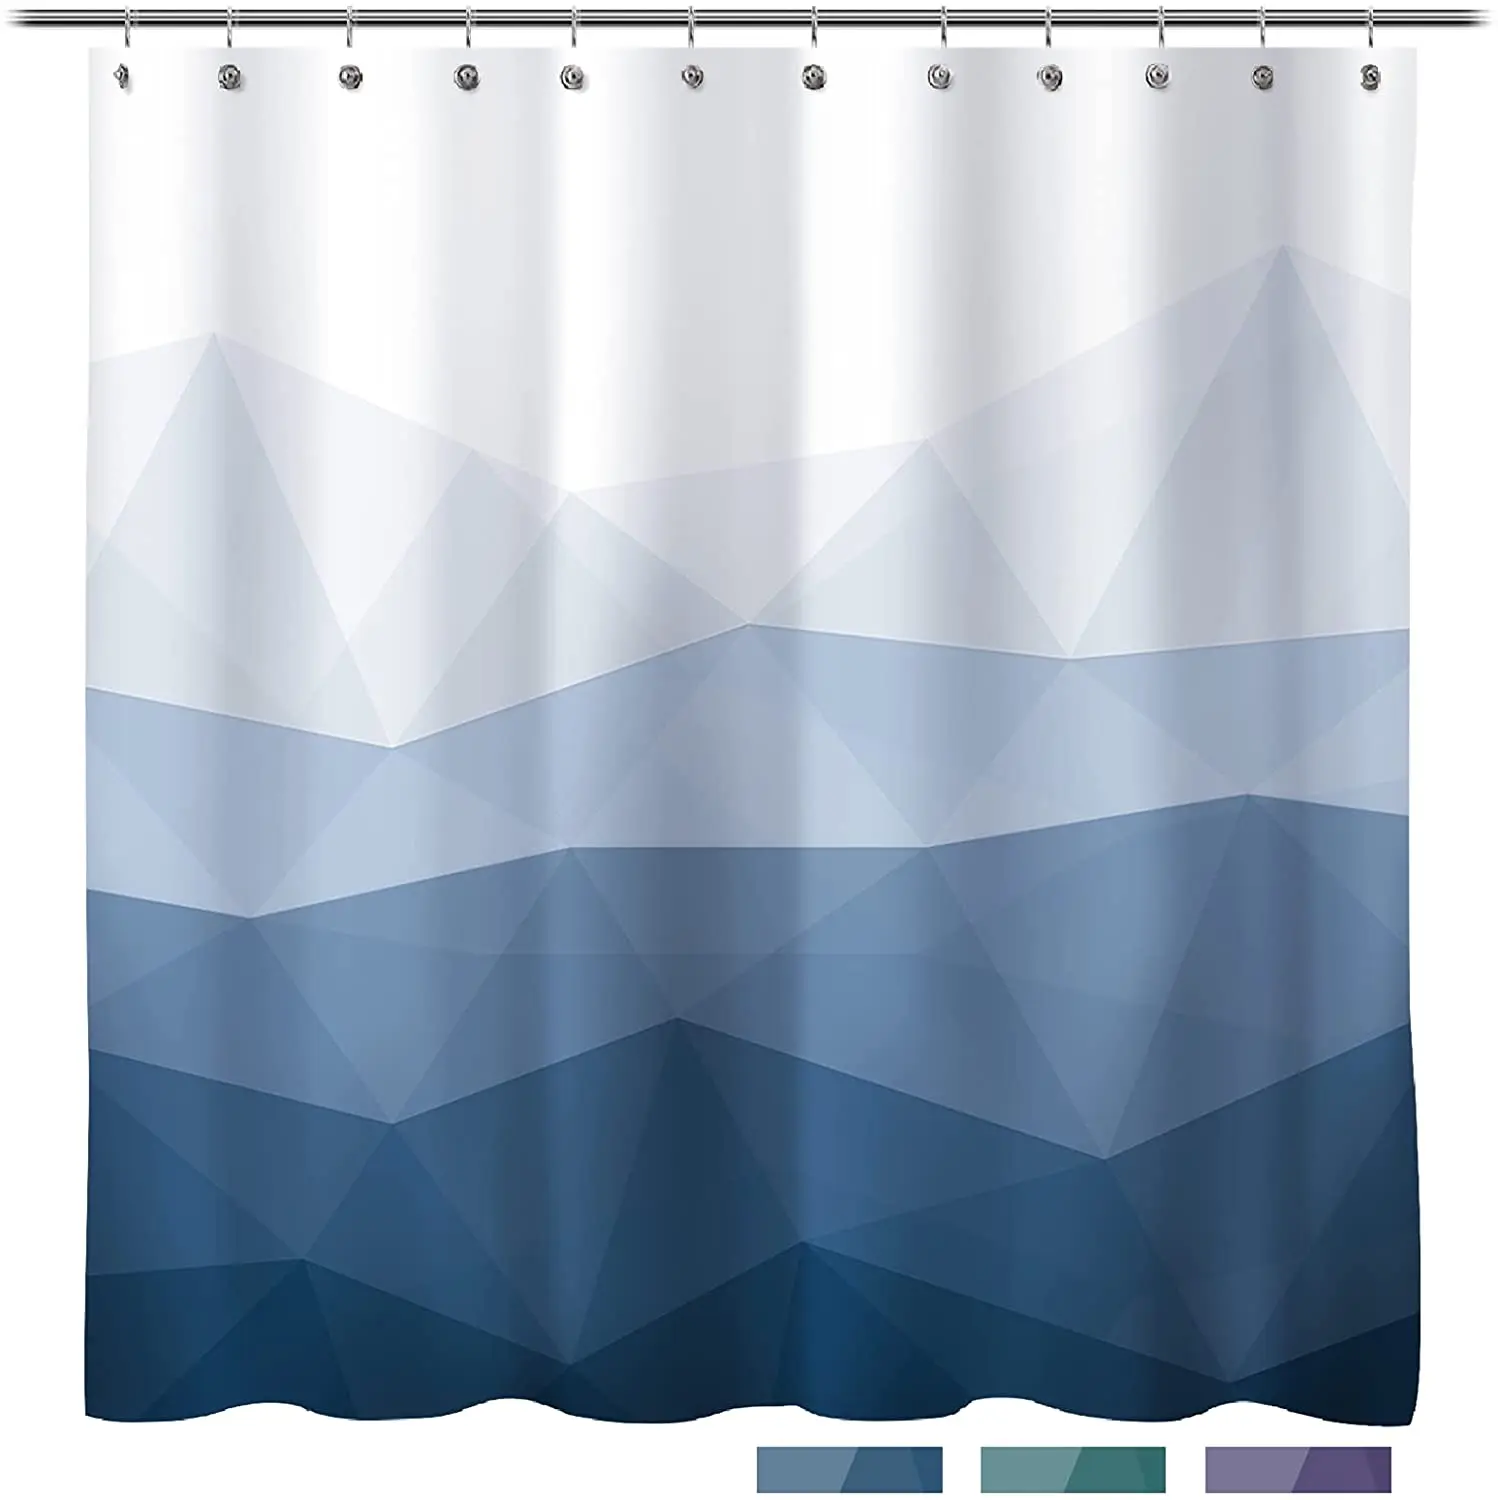 

Hot wholesale waterproof 100% polyester digital printing shower curtains, Printed